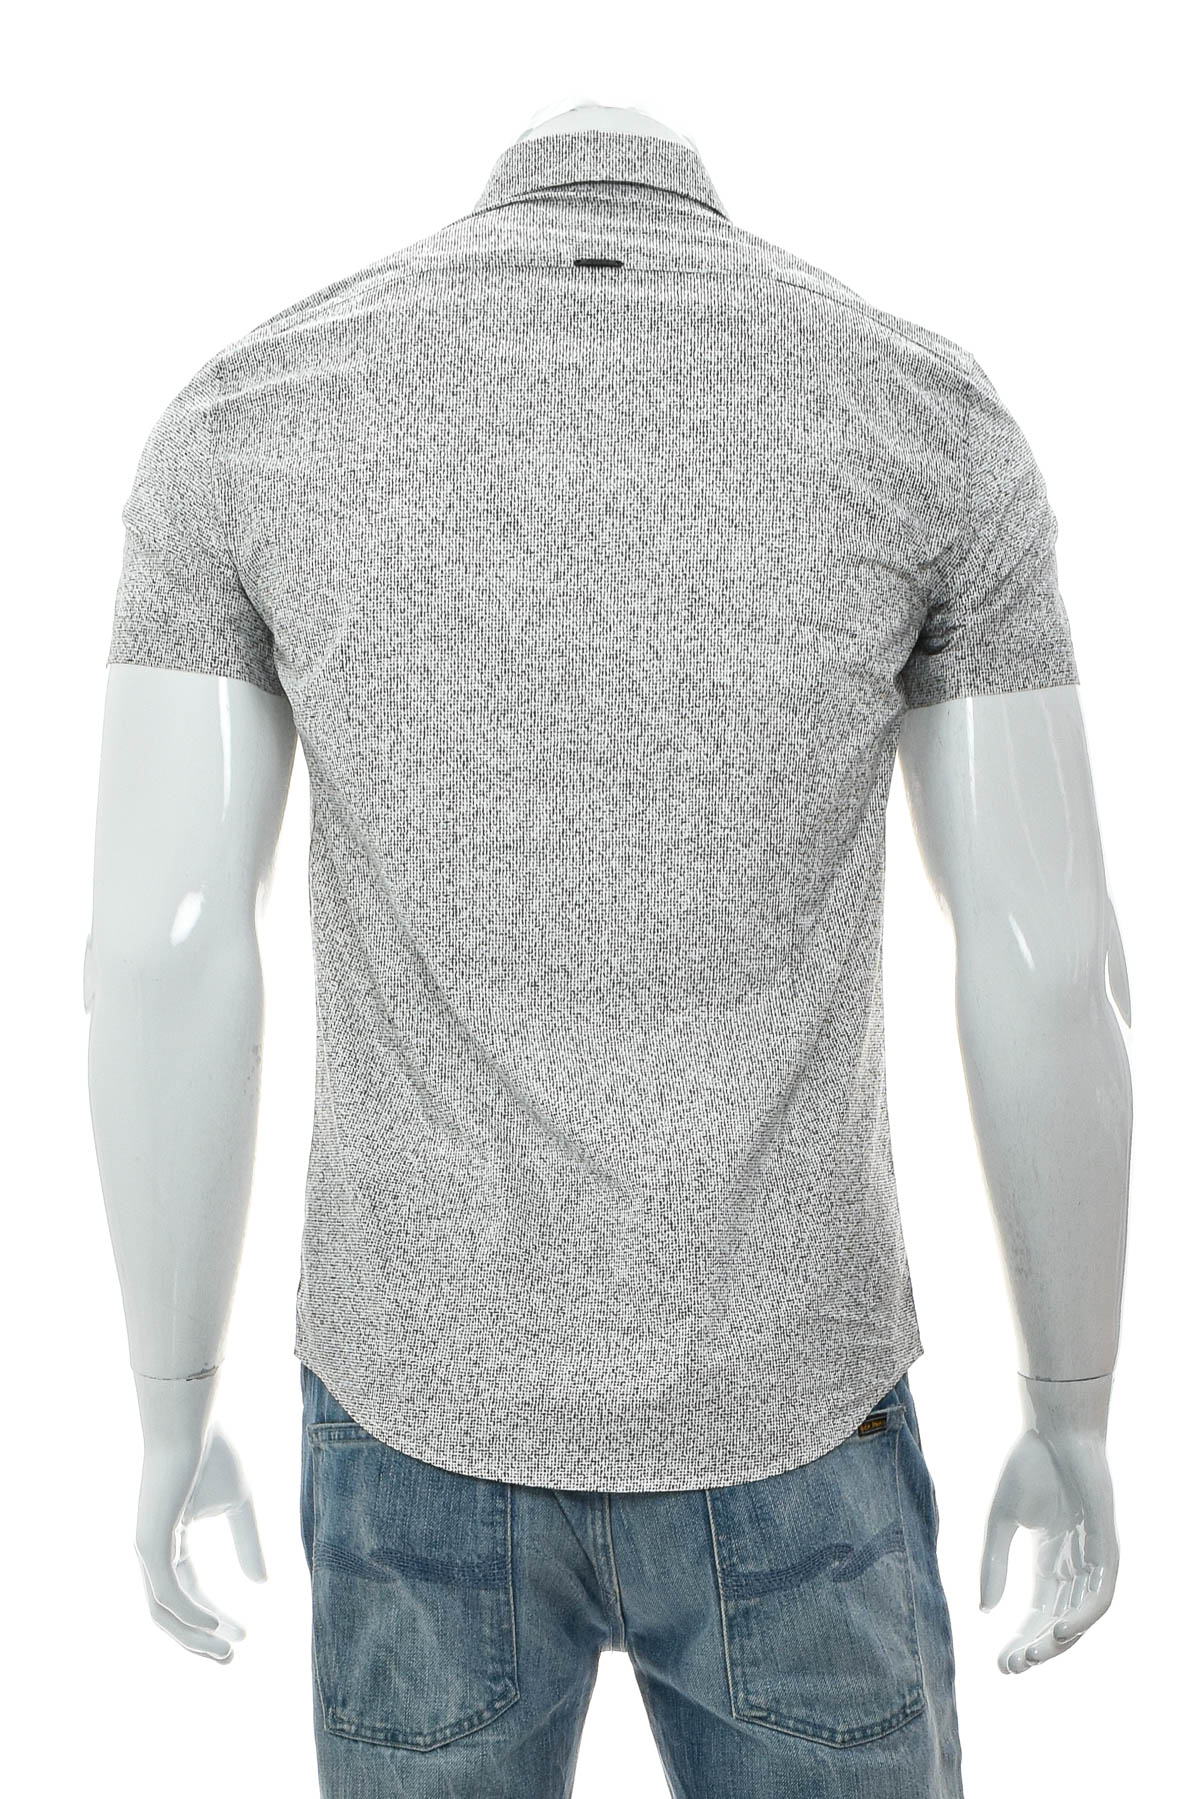 Men's shirt - Antony Morato - 1